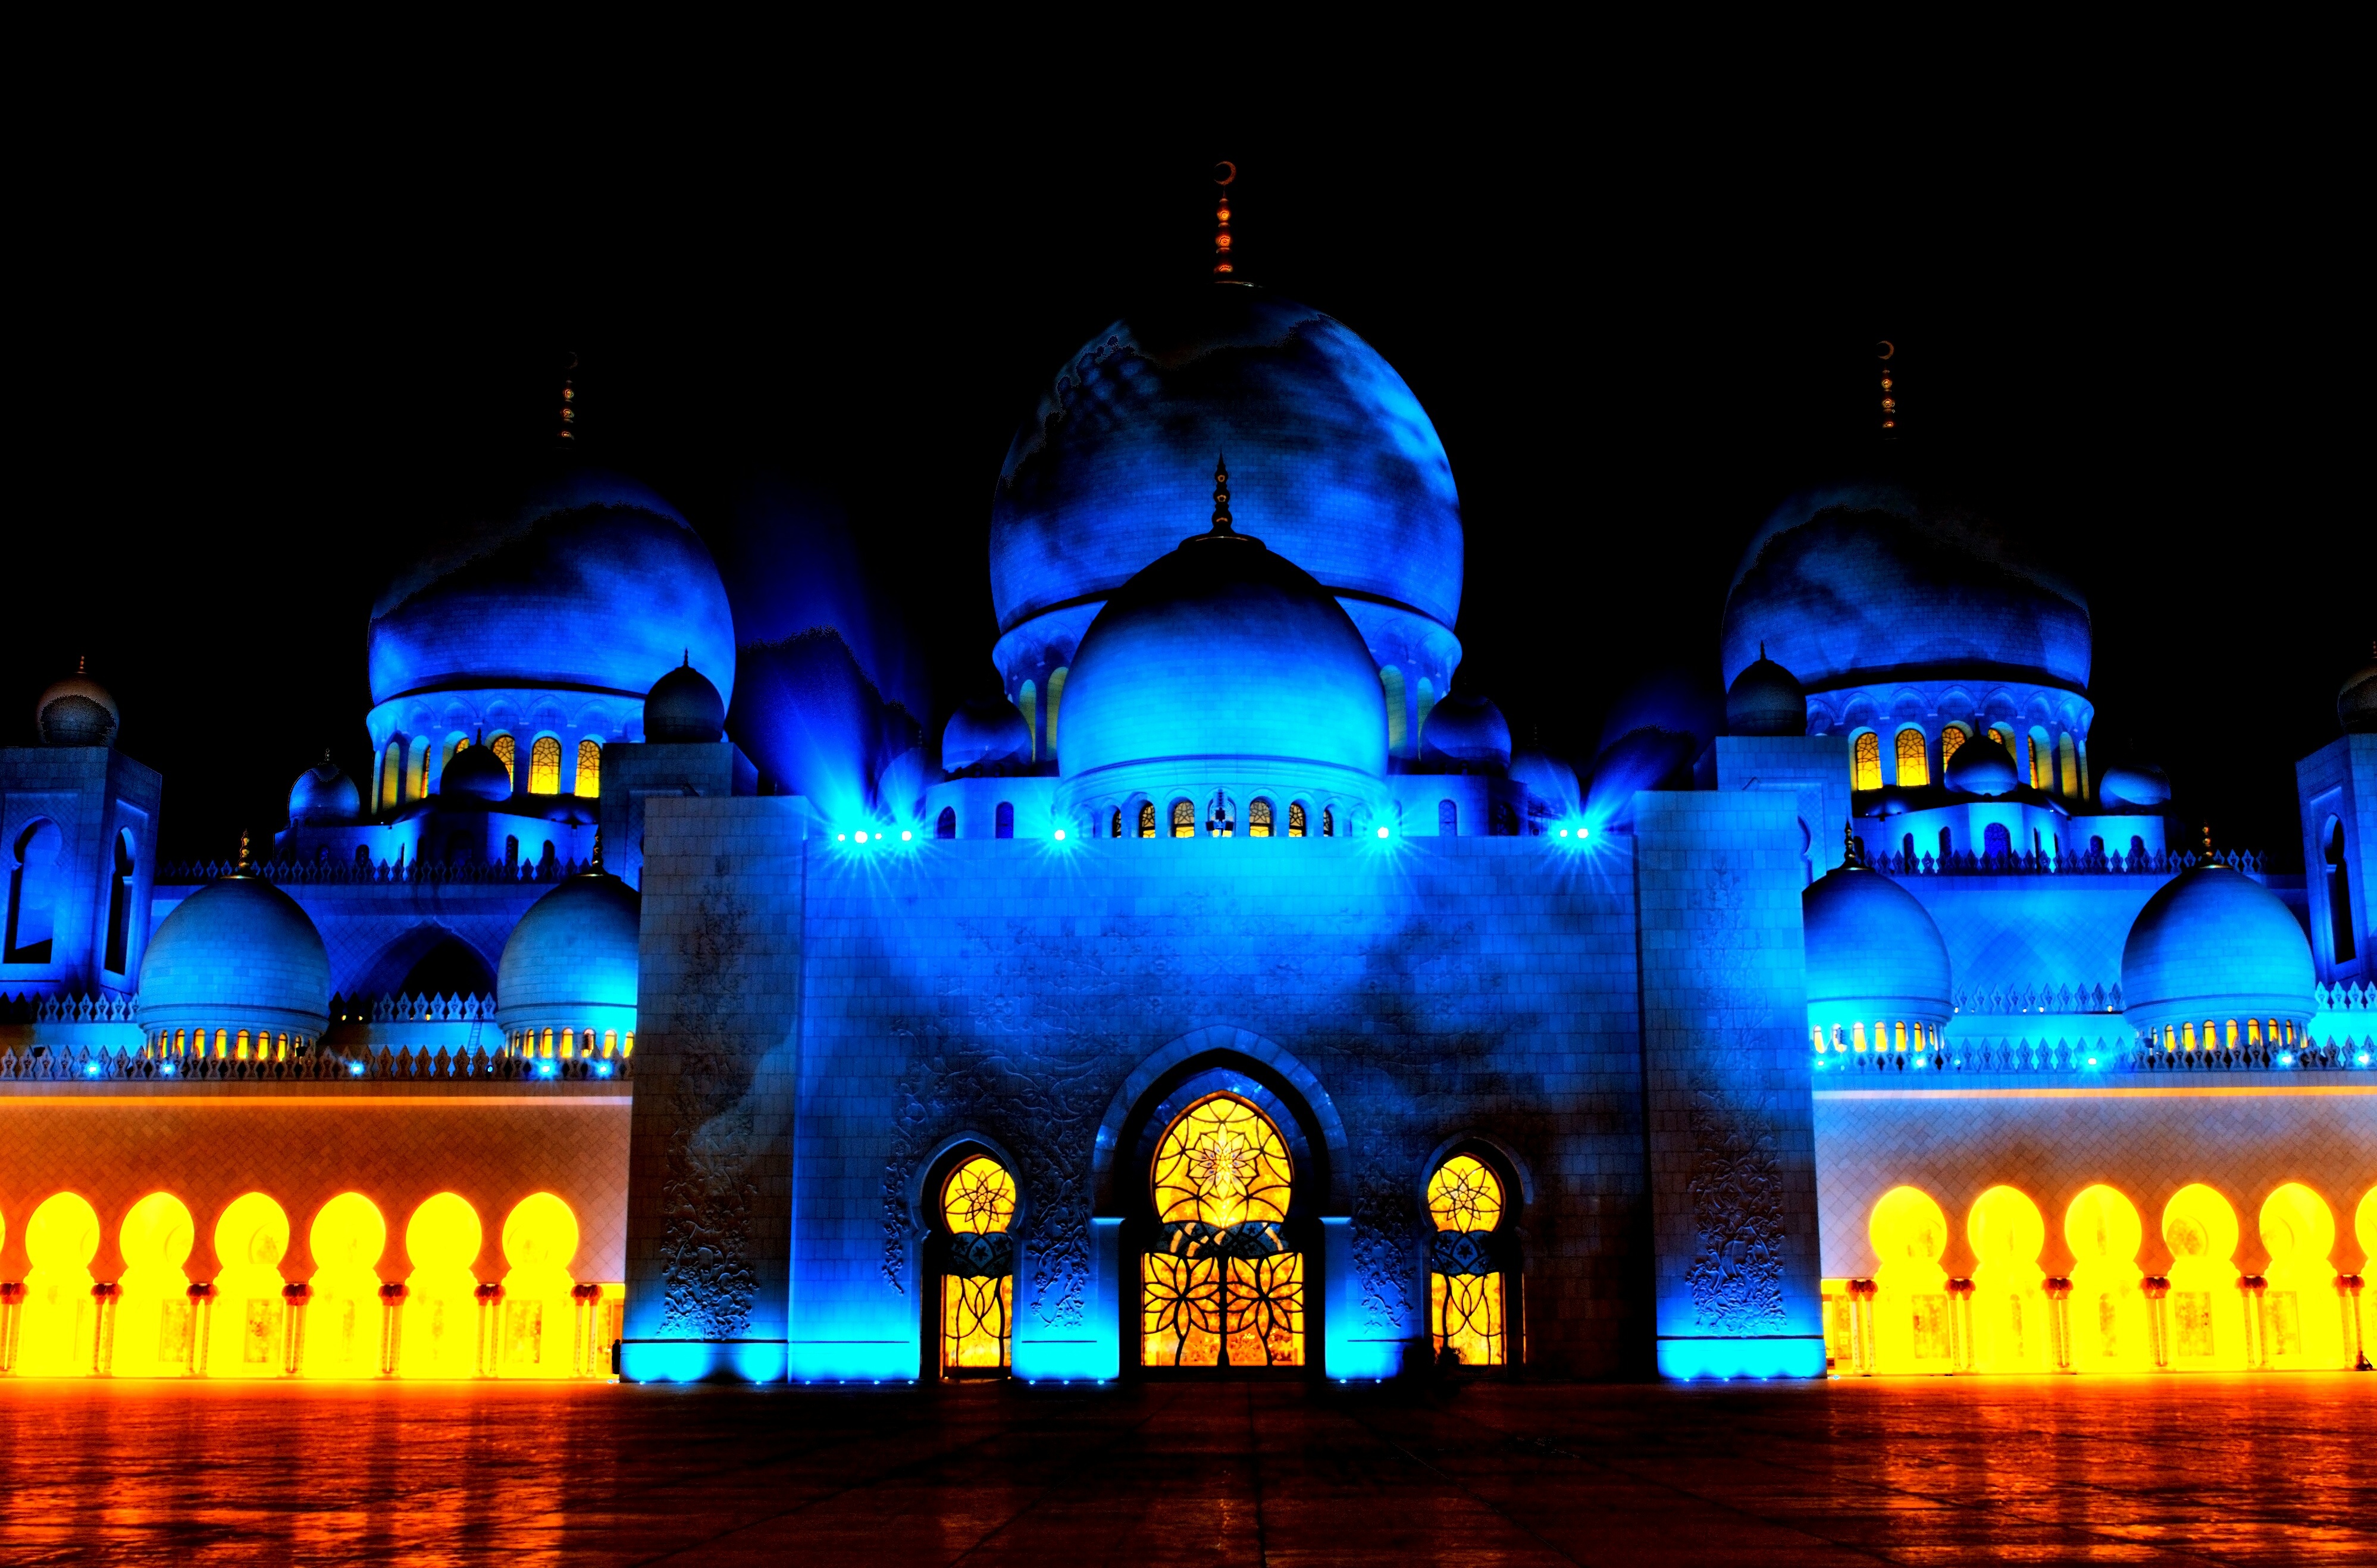 Как будет арабская ночь. Мечеть шейха Зайда Абу-Даби. Мечеть шейха Зайда ночью. Мечеть Аладдина Анкара. Мечети Востока.